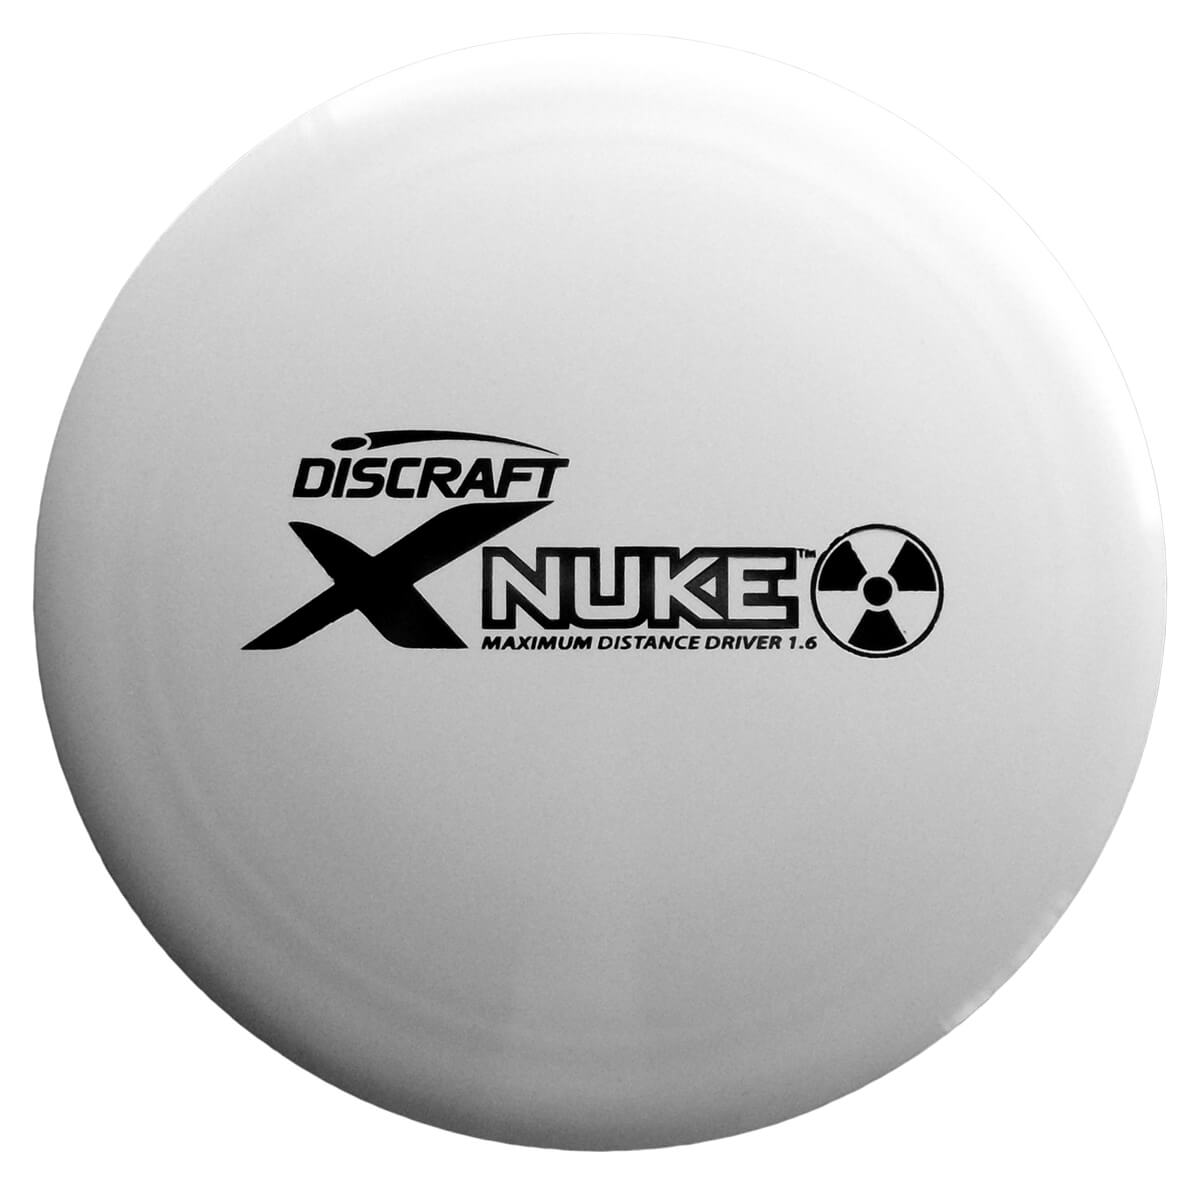 Discraft Disc Golf Distance Driver X-Line Nuke 